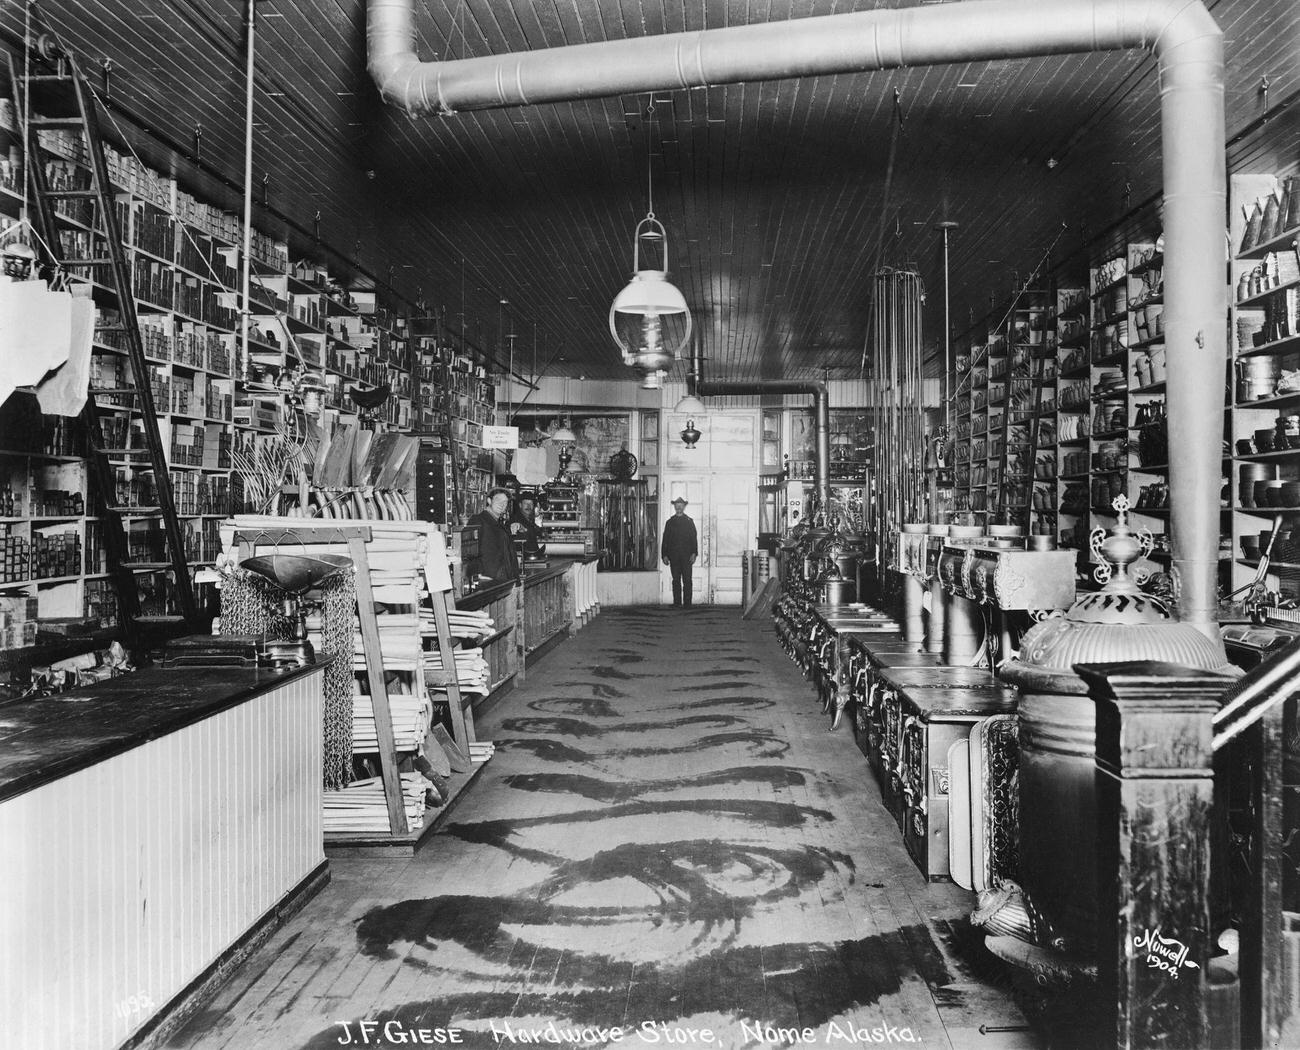 J.F. Giese's hardware store in Nome, Alaska, during the Klondike Gold Rush, 1904.